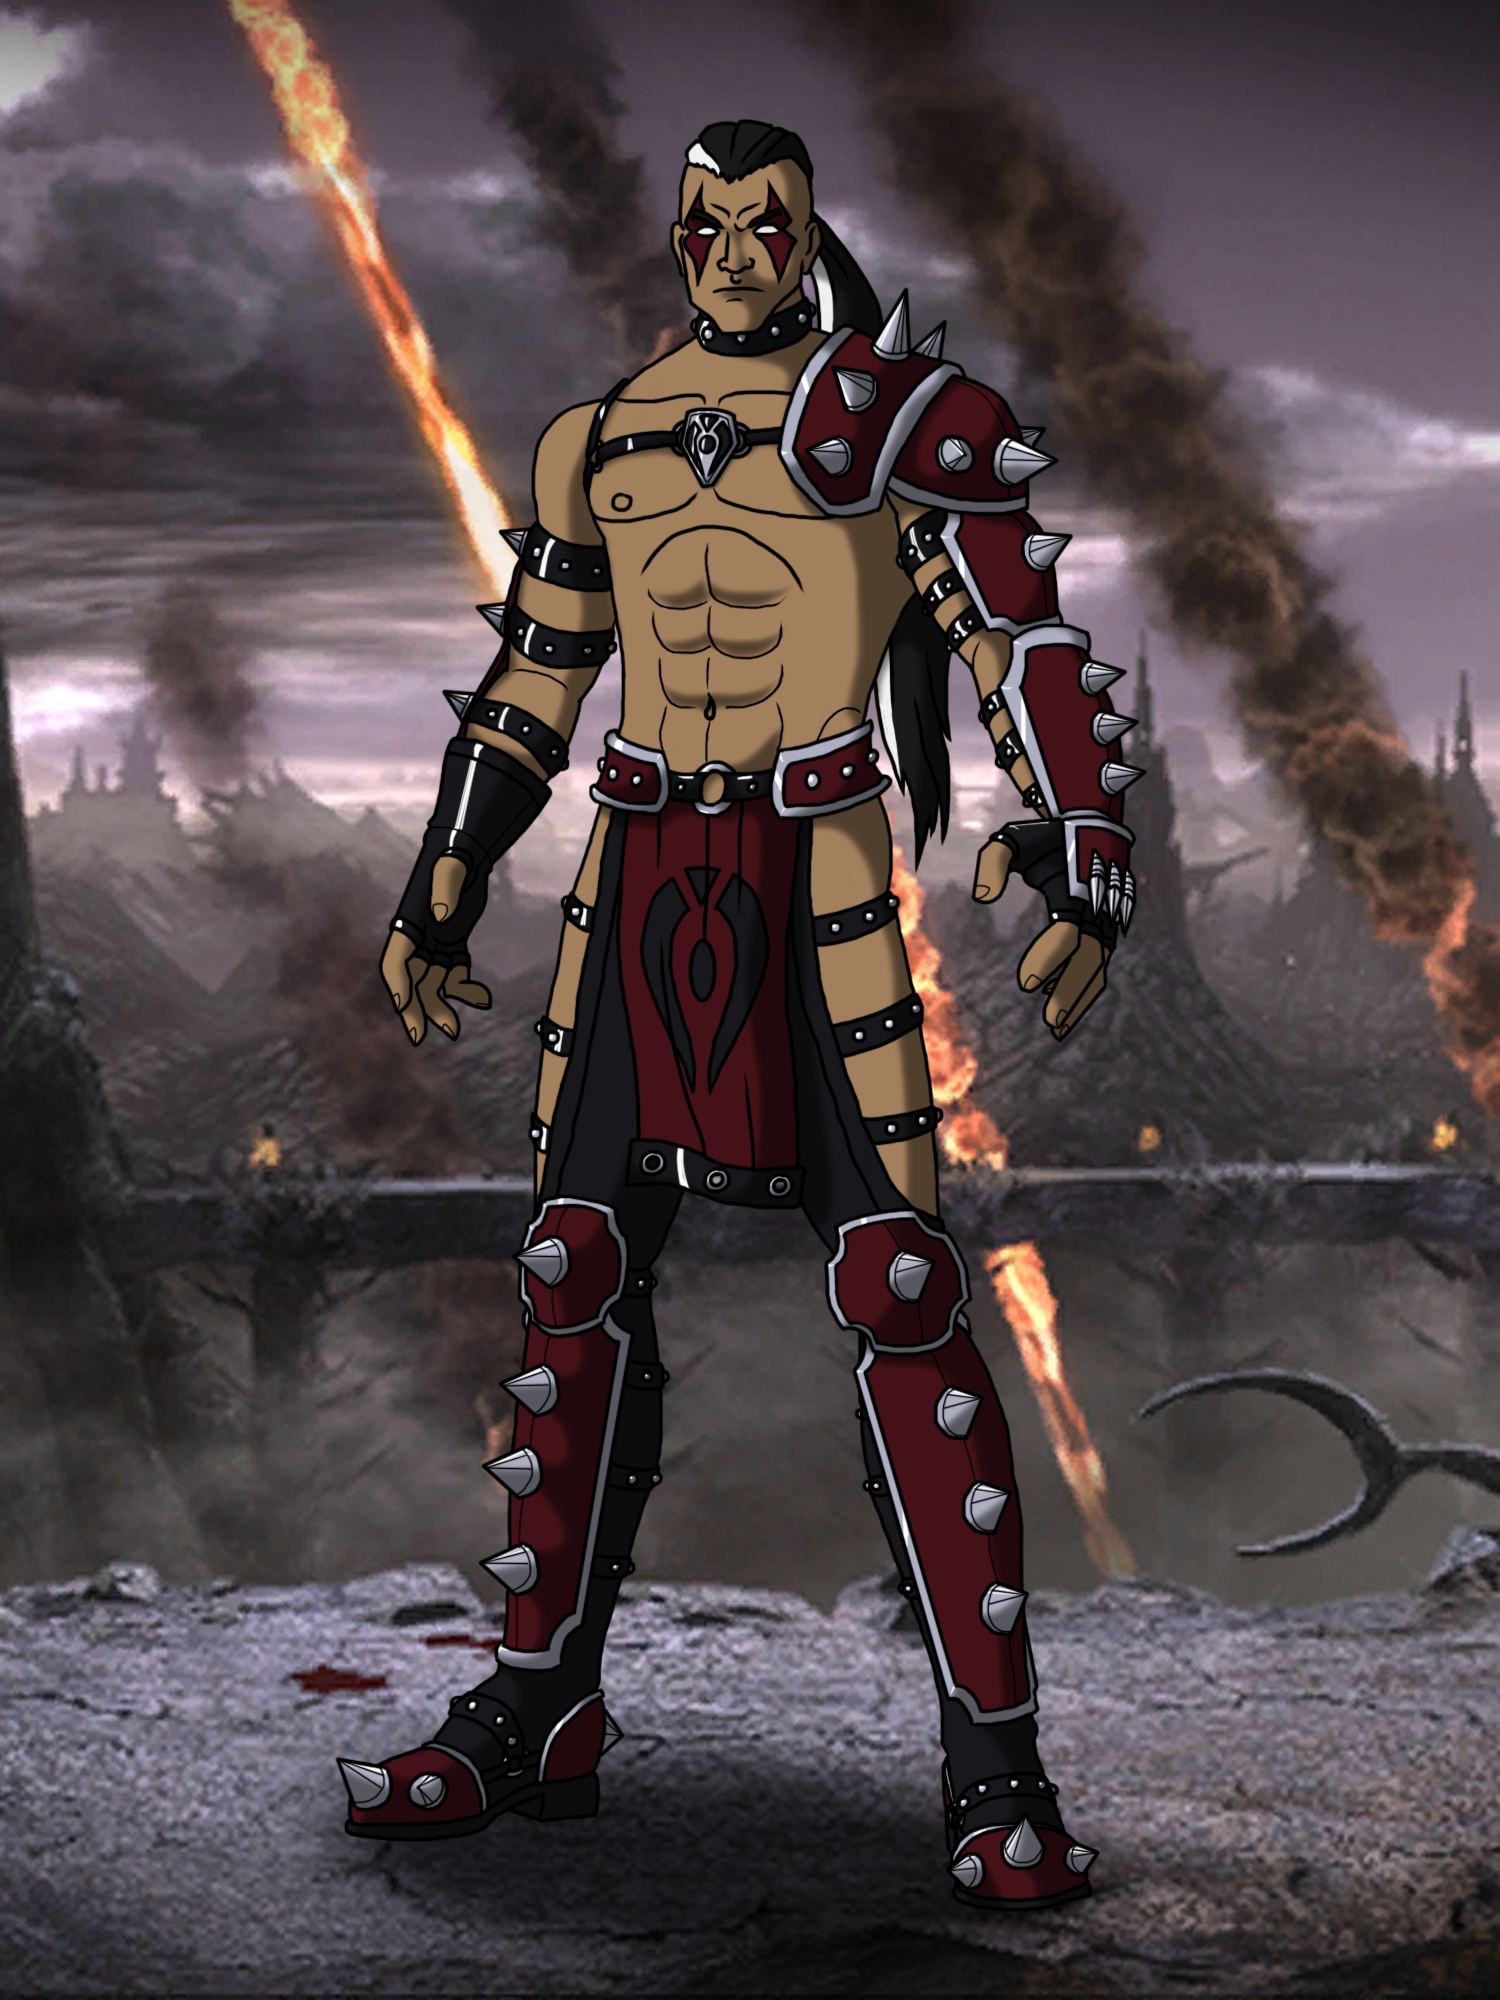 Best Mortal Kombat Characters - Reiko